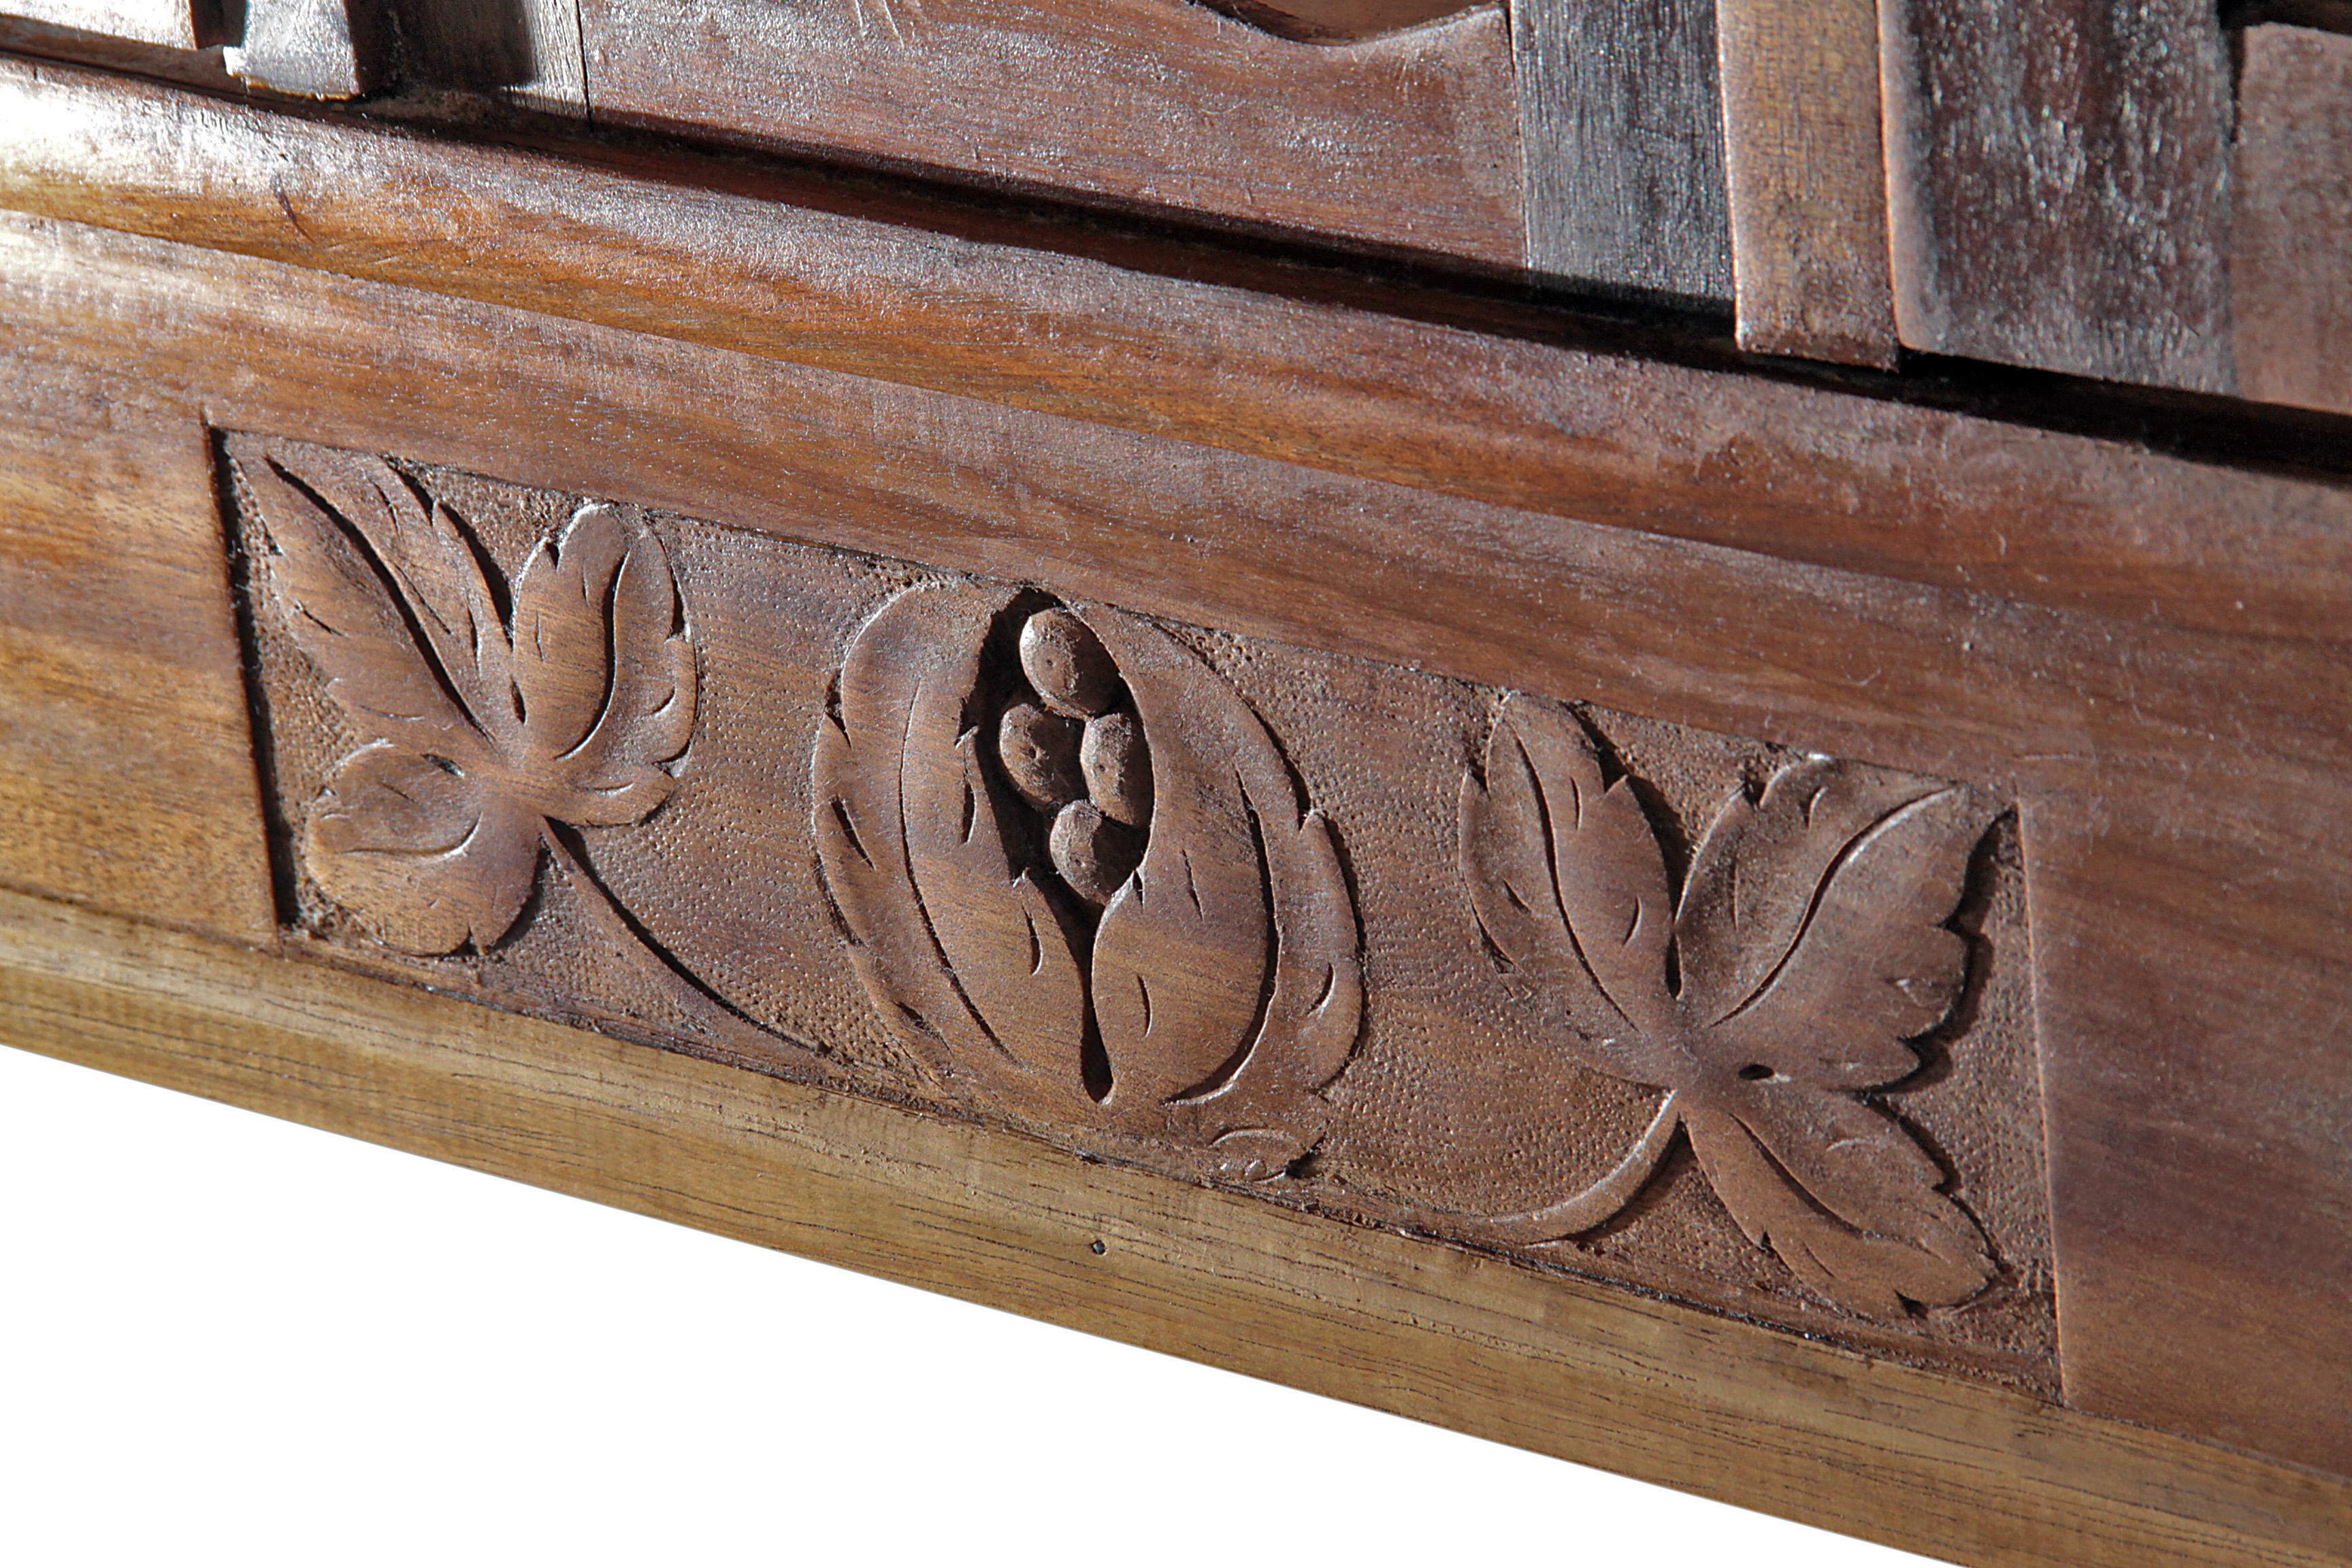 Colonial Revival Antique Brazilian Wooden Contemporary Baroque Glass Cabinet, Restauro #1 For Sale